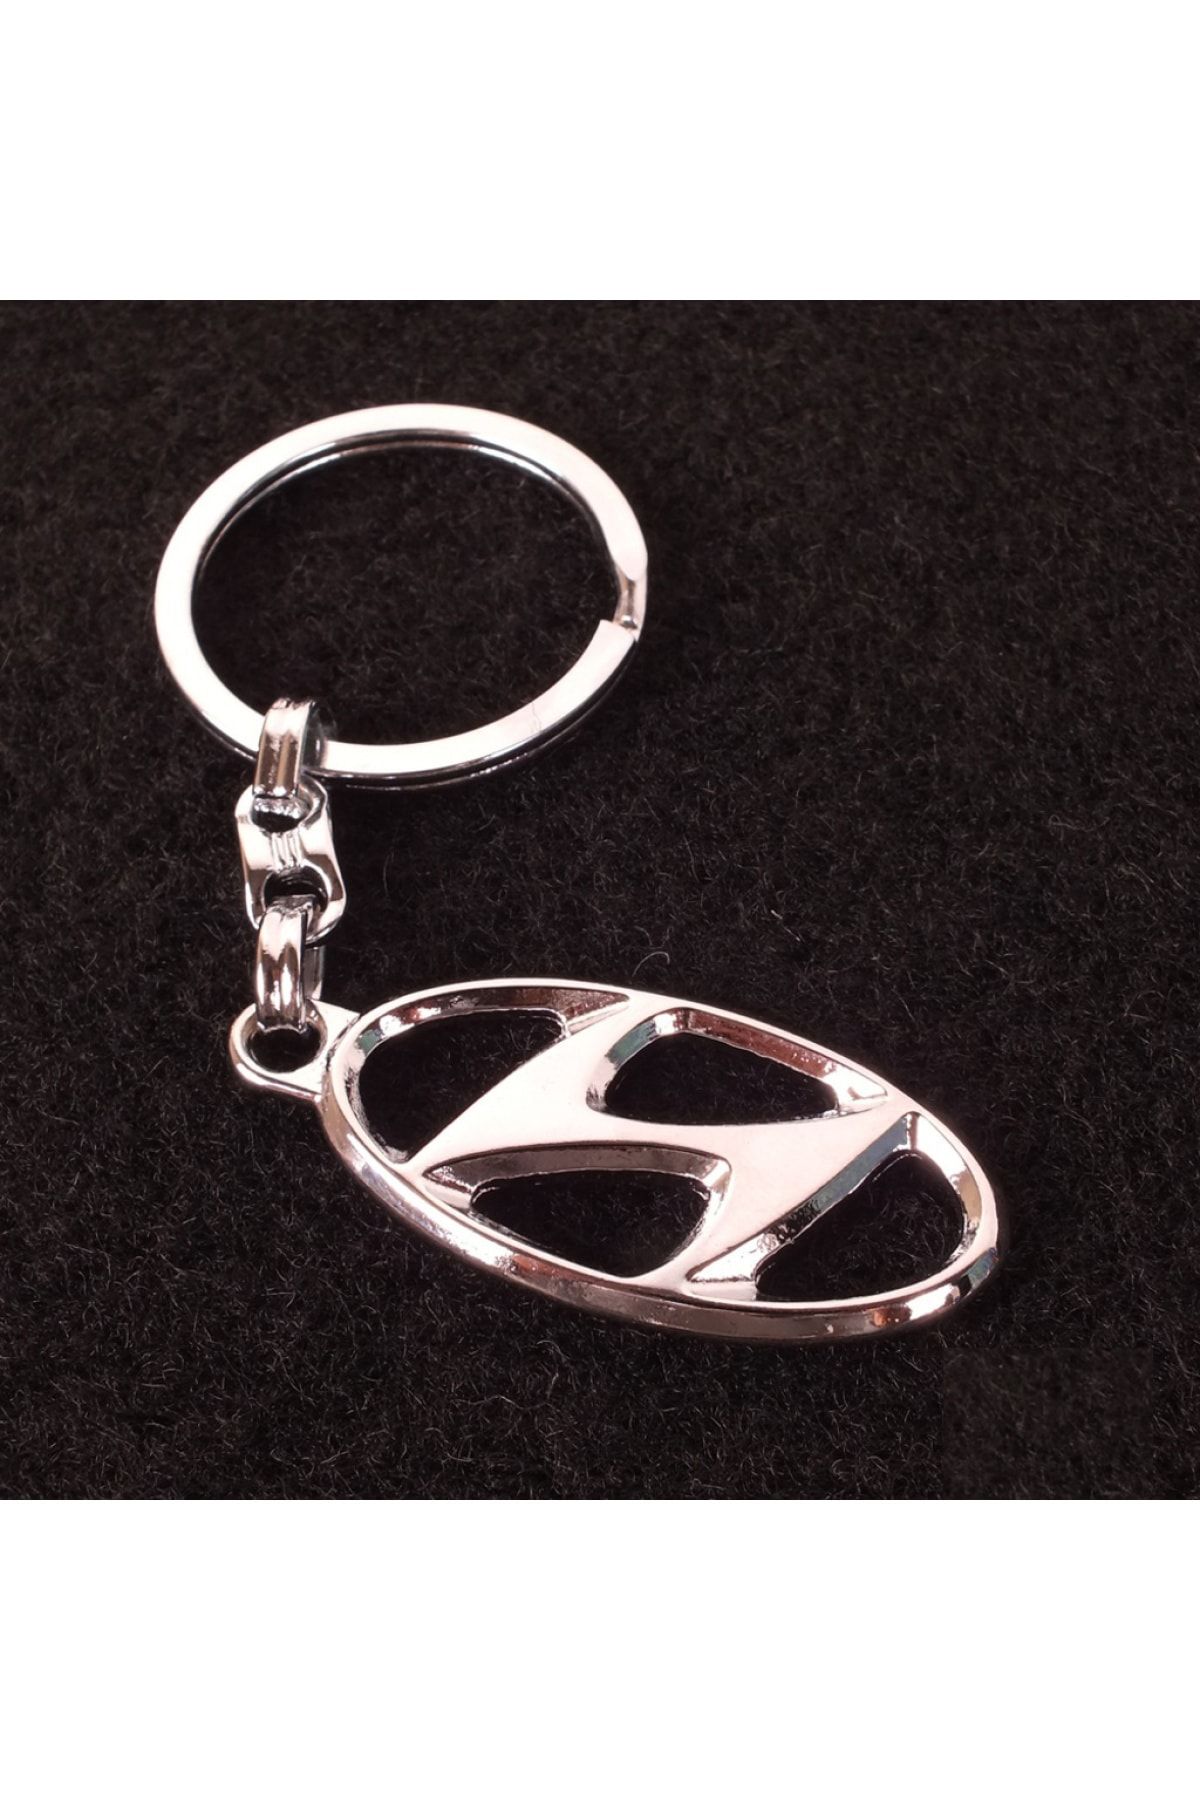 GARDENAUTO Hyundai 3d Metal Otomobil Anahtarlığı - Krom Kaplamalı Oto Anahtarlık